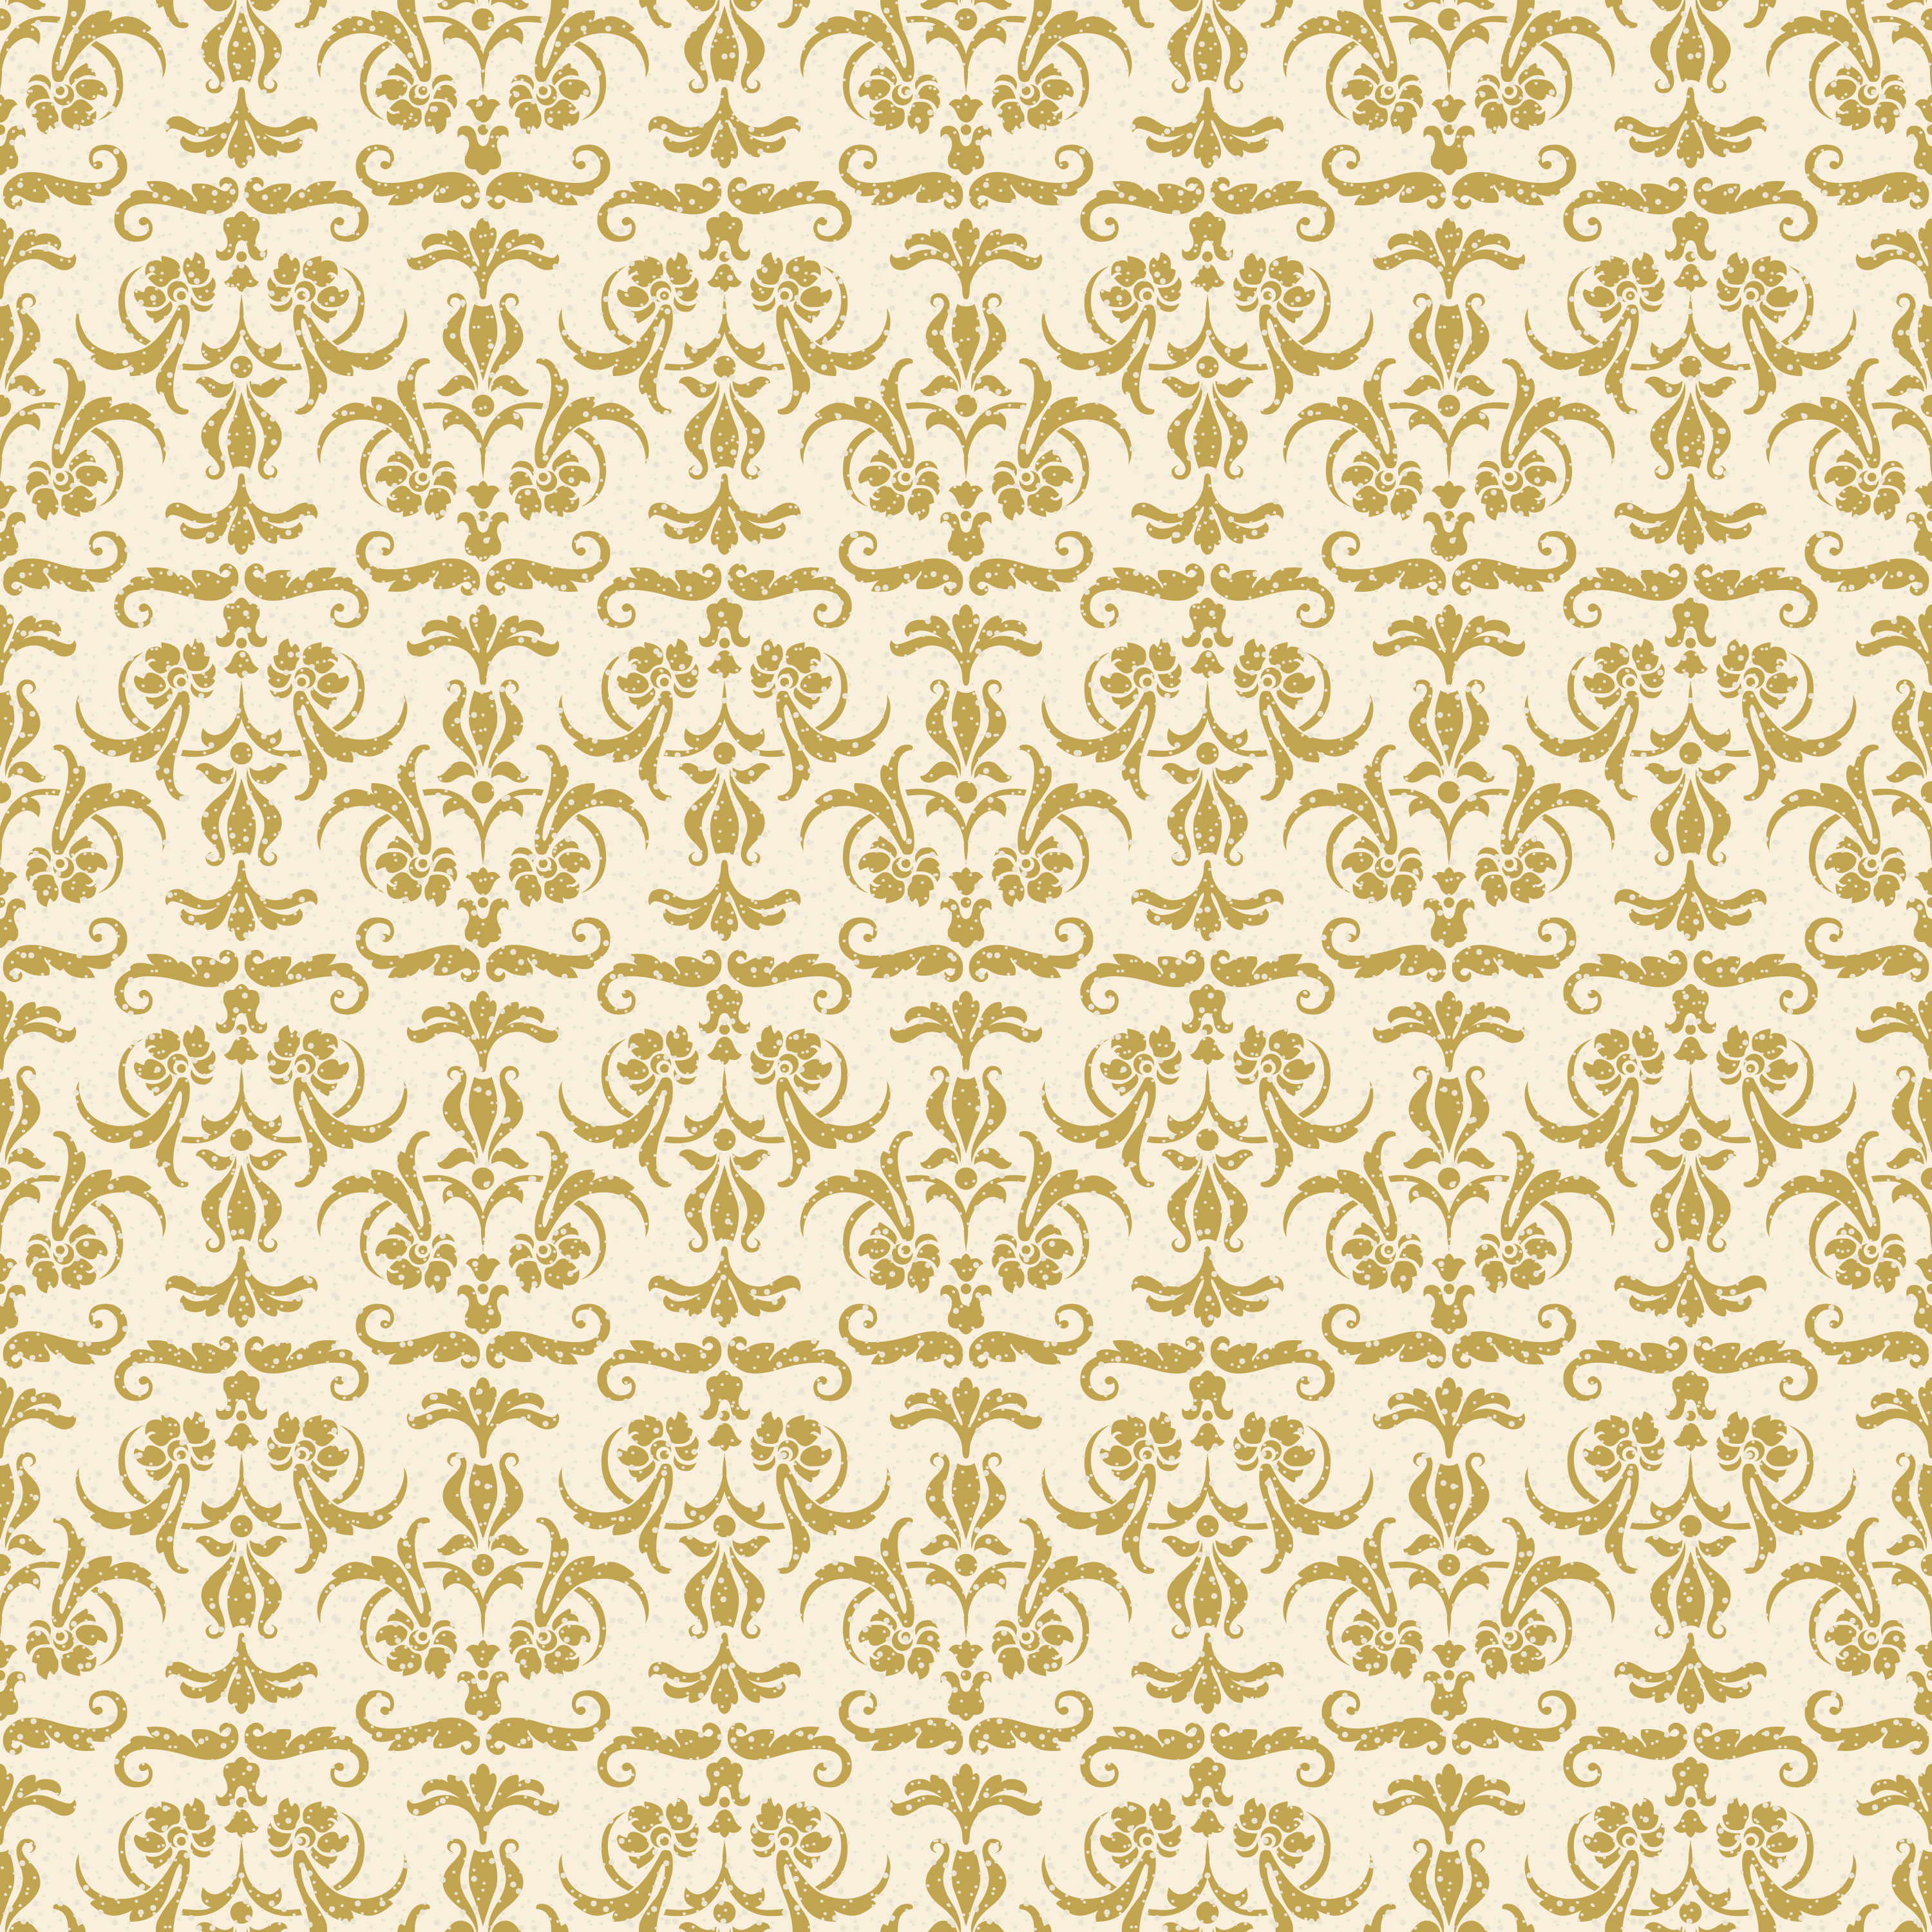 Gold damask wallpaper Royalty Free Vector Image